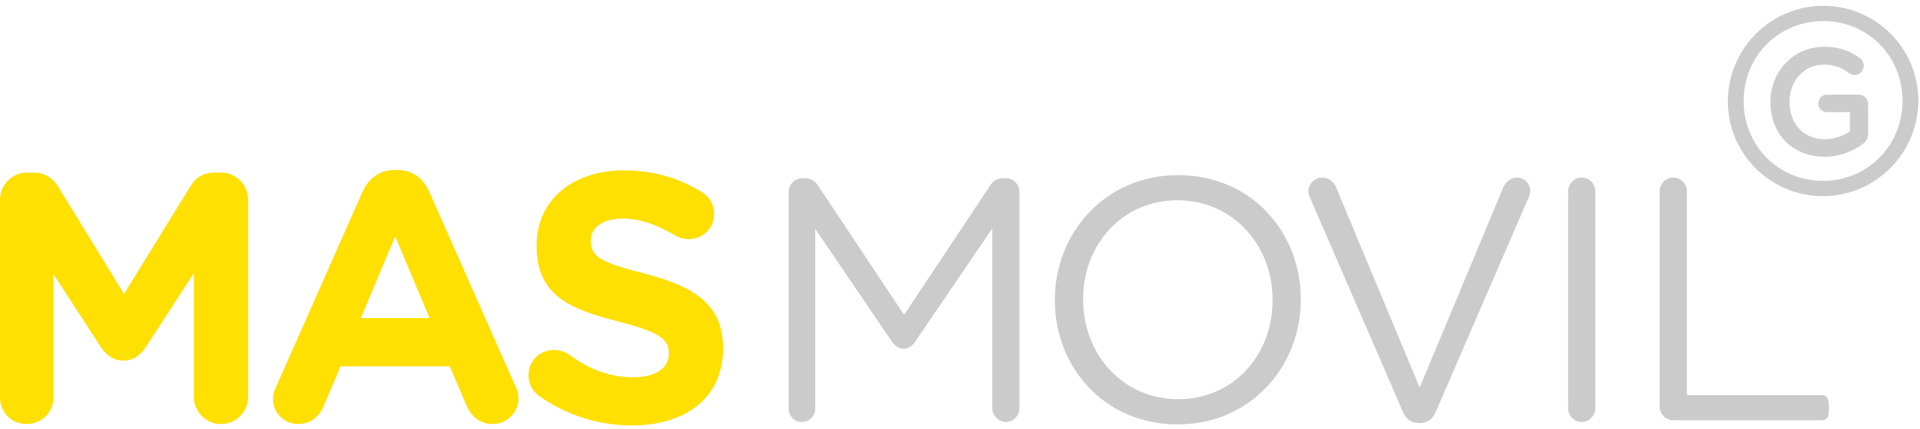 MASMOVIL logo empresa colaboradora con SecuriBath